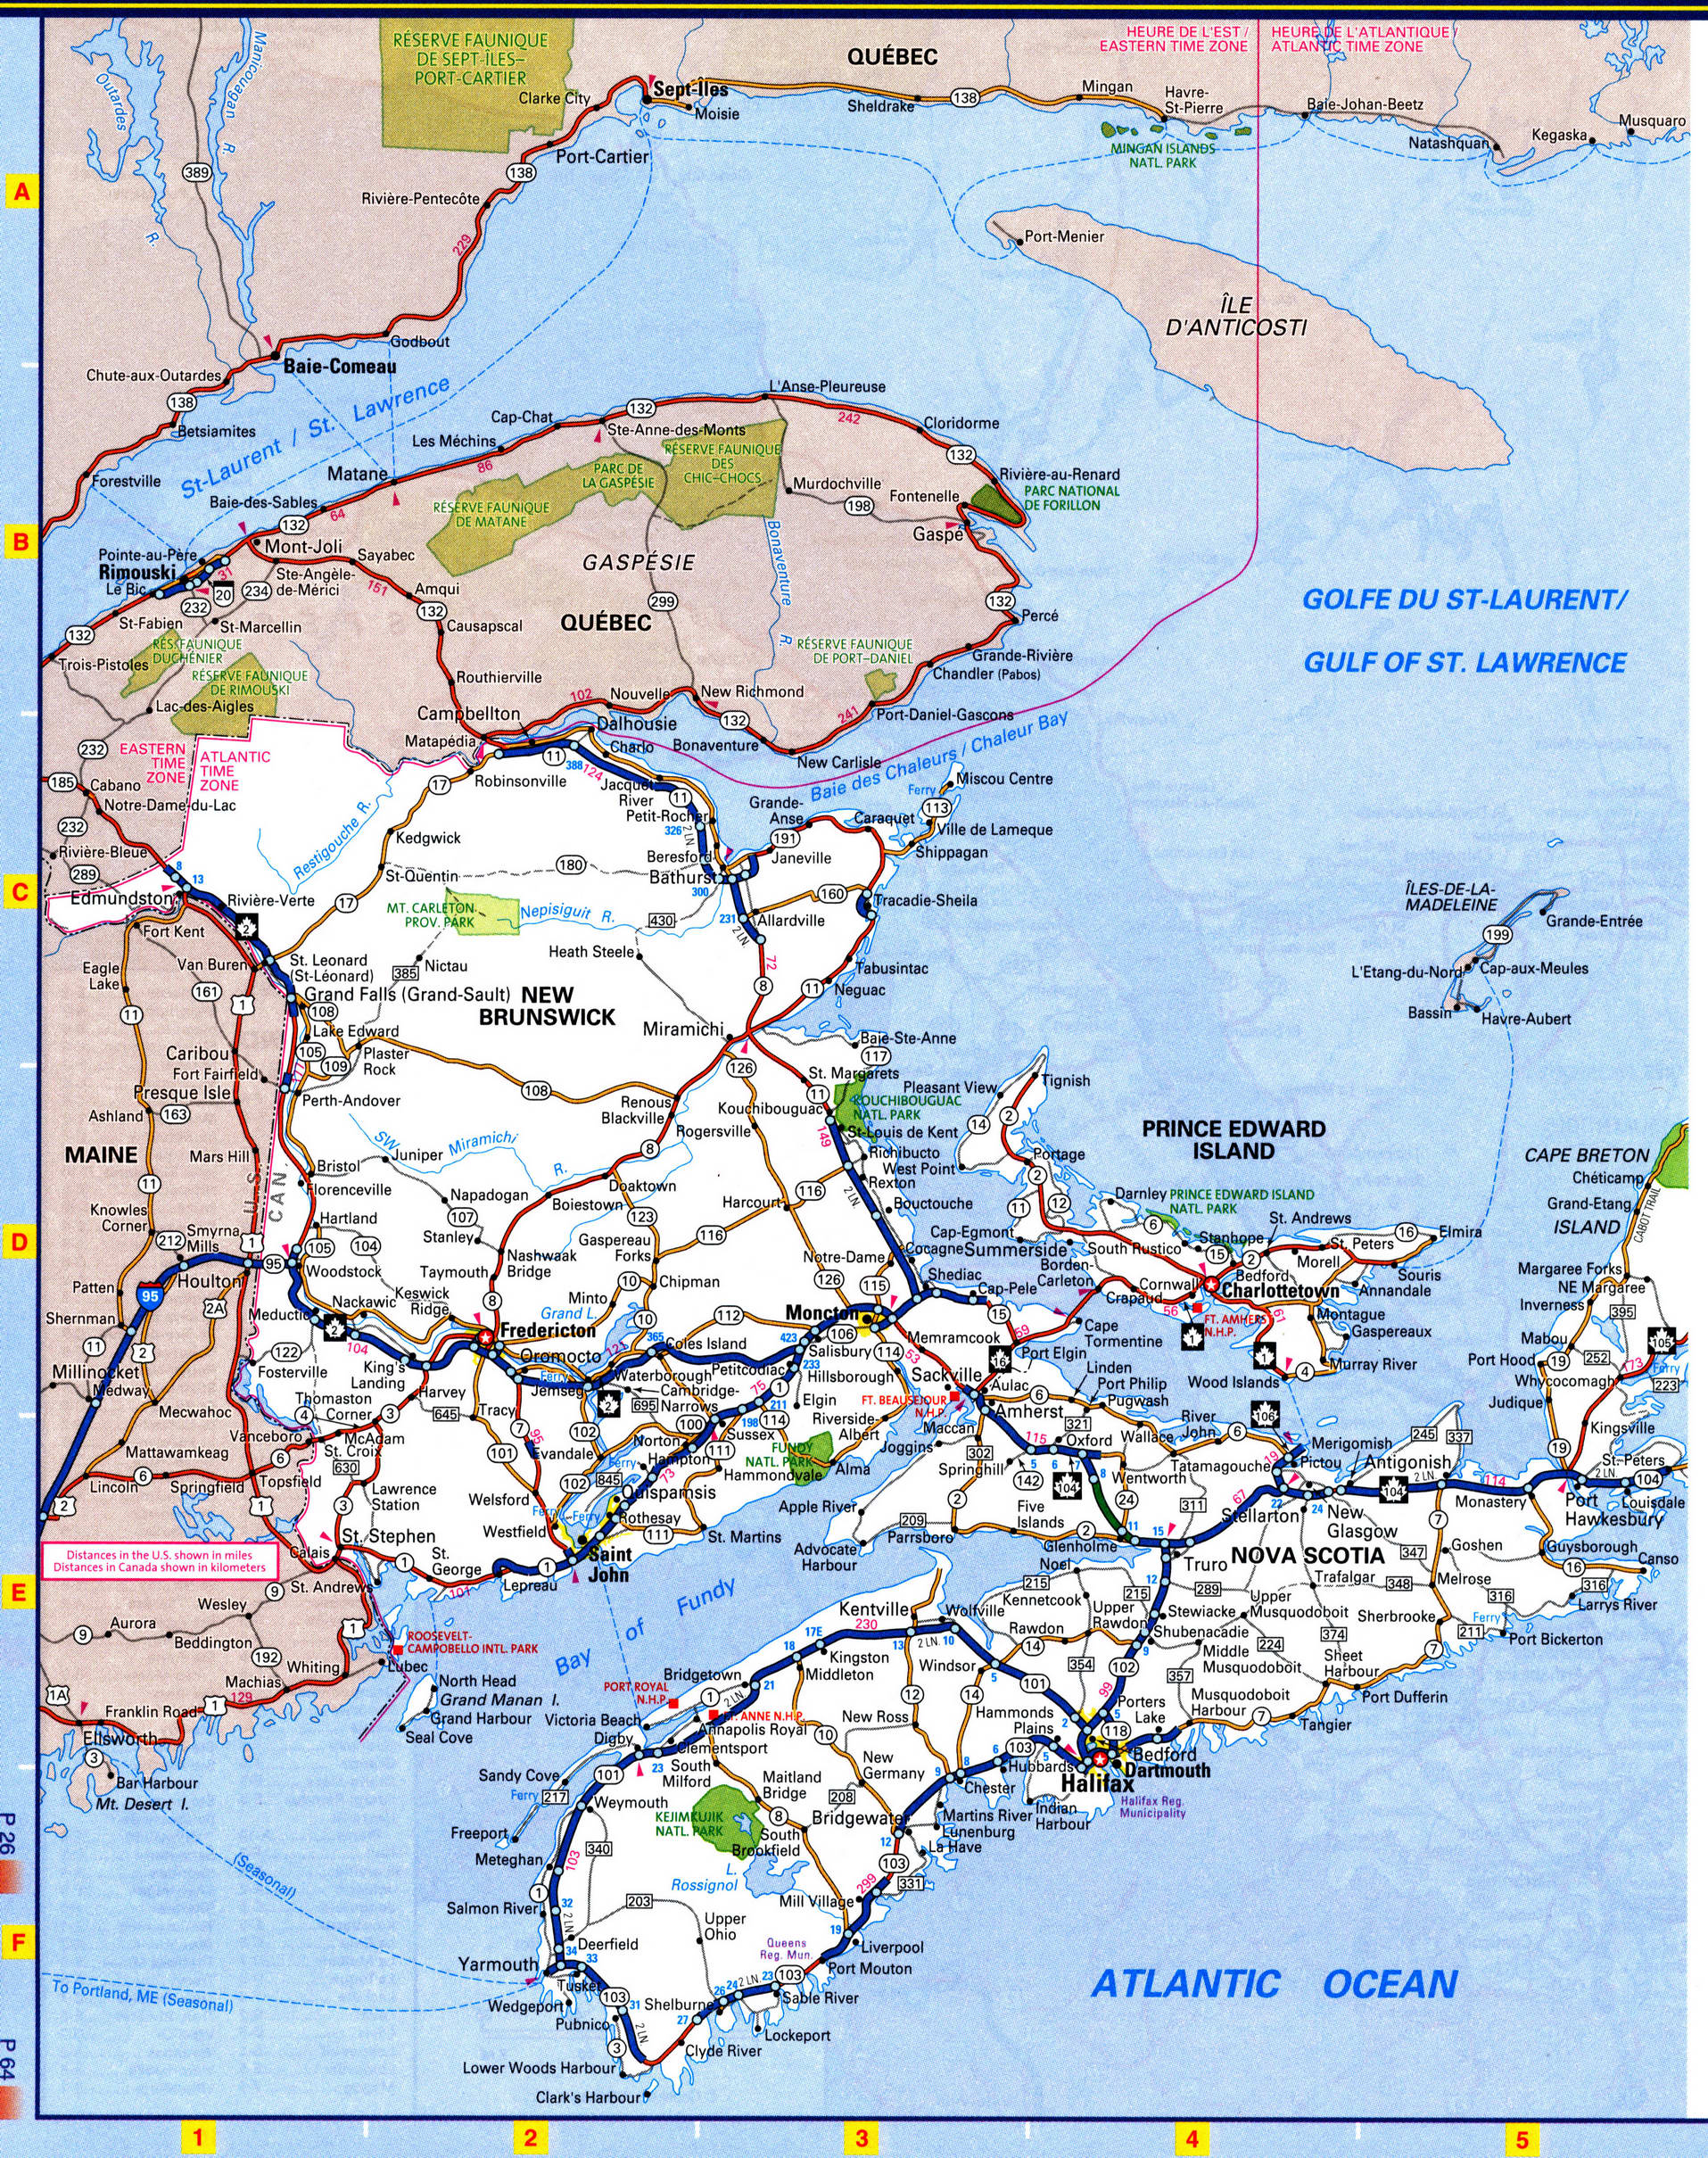 Prince Edward Island detailed map